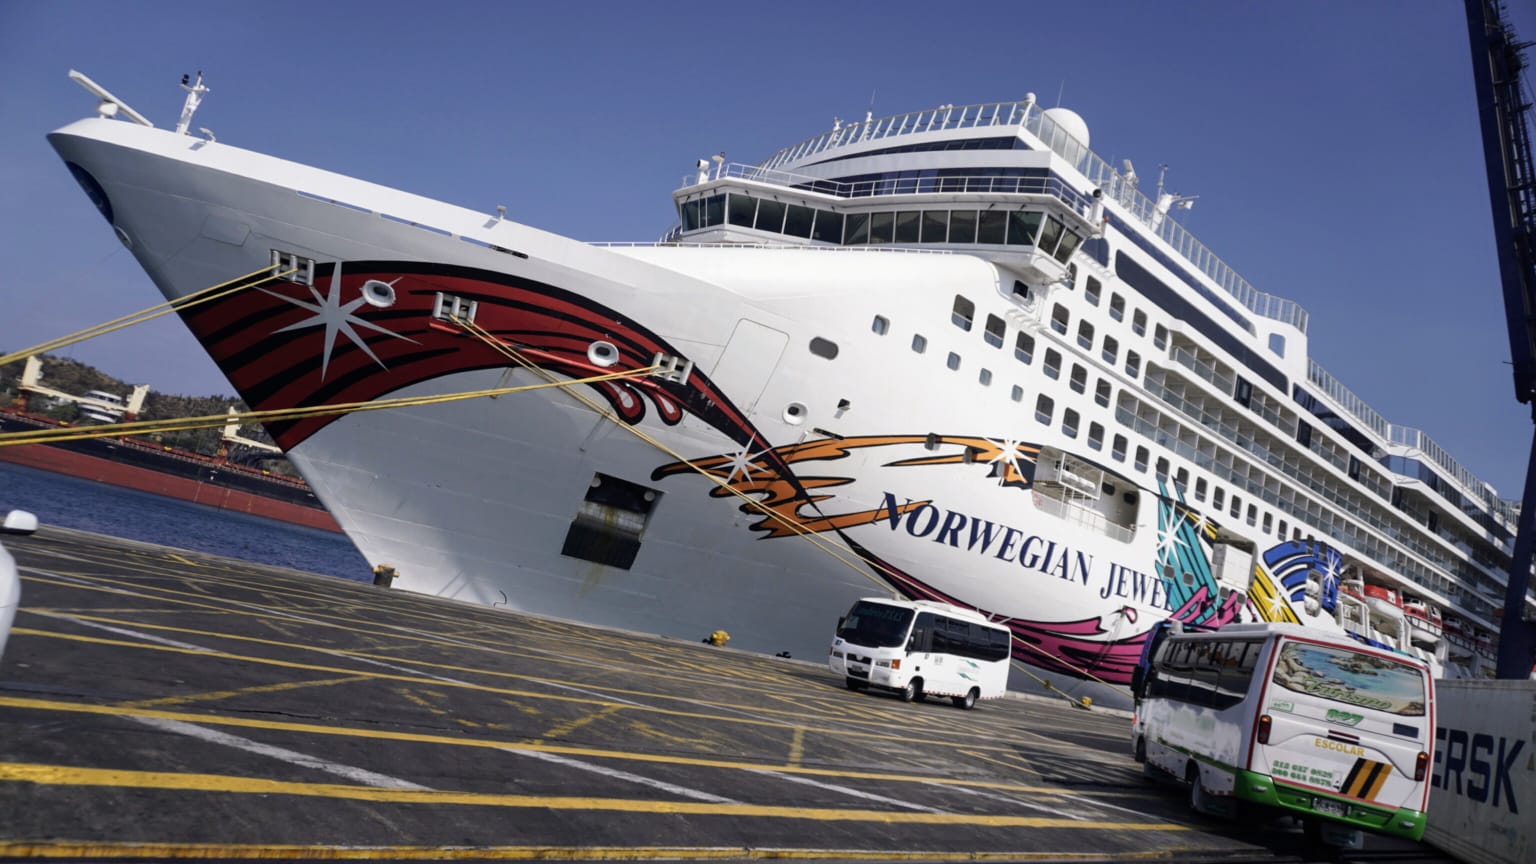 El megacrucero Norwegian Jewel arribó con 2449 turistas al Puerto de Santa Marta